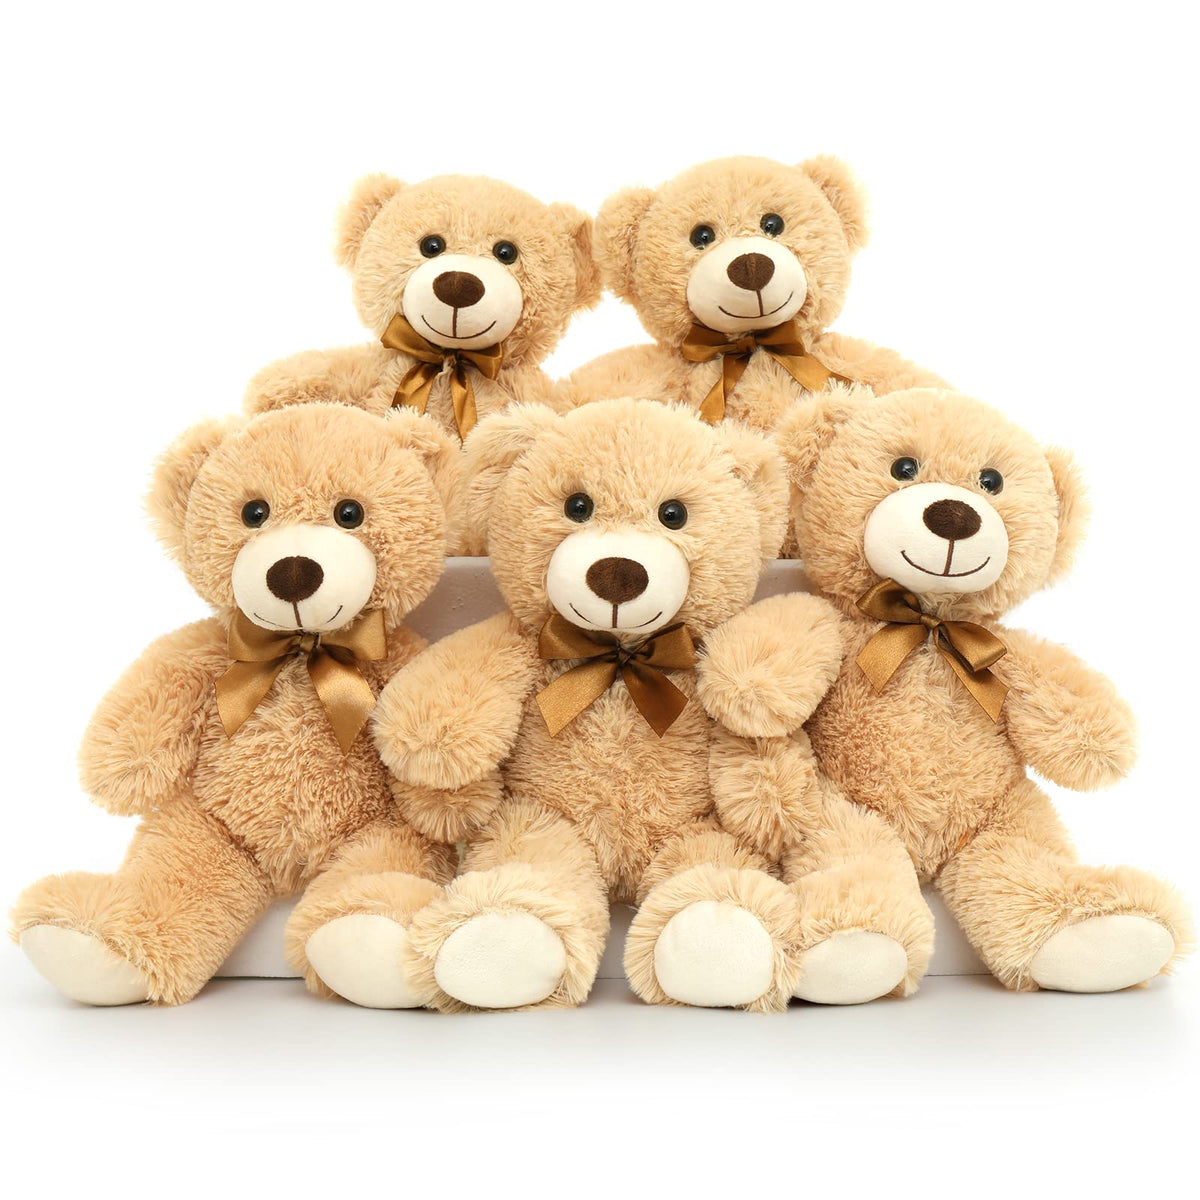 Tezituor Bulk Teddy Bears Stuffed Animal, Teddy Bear Bulk Stuffed Bears Plush, Small Teddy Bears for Baby Shower, Party Centerpiece, Valentines, Birthday